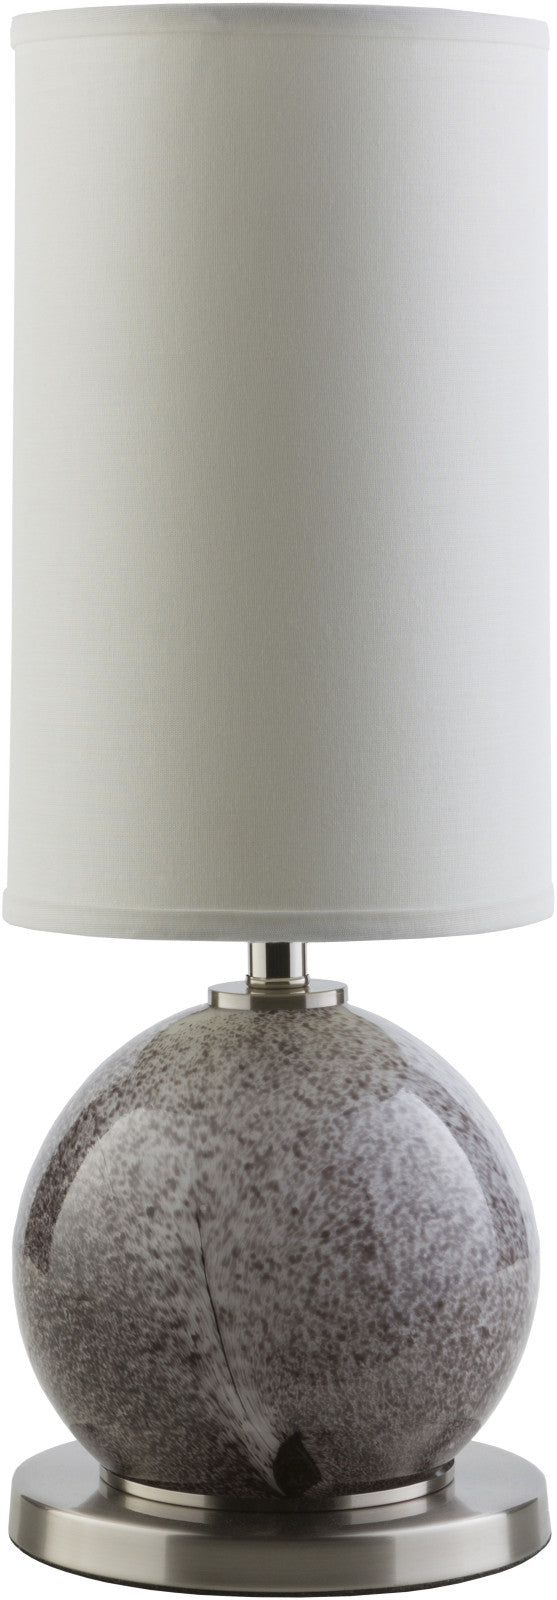 Surya Broderick BDC-480 Ivory Lamp Table Lamp